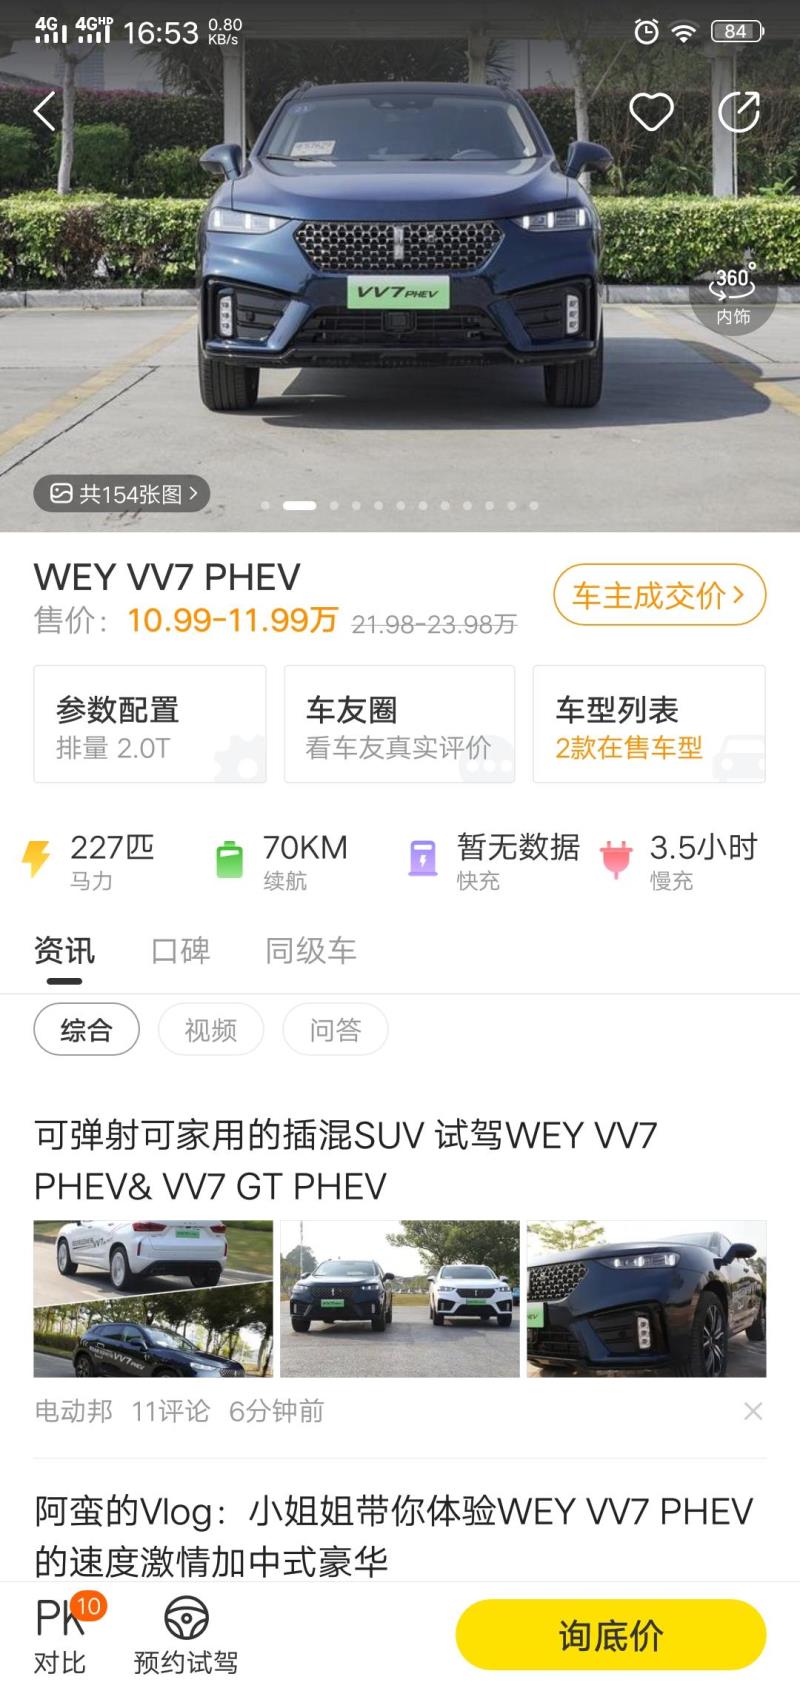 wey vv7 phev，10.99-11.99万是真的吗